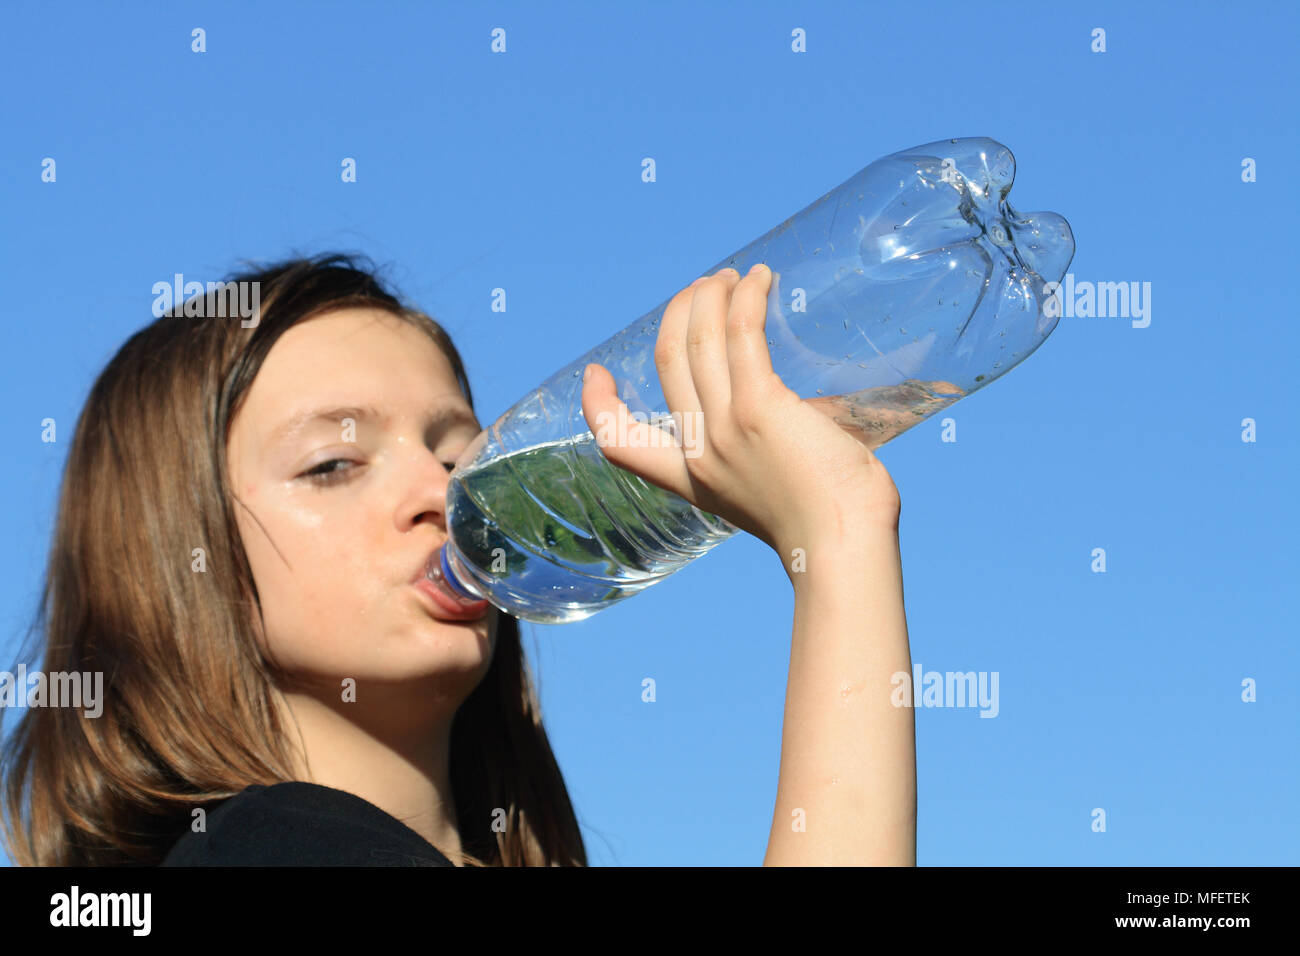 https://c8.alamy.com/comp/MFETEK/beauty-teenage-girl-drinking-water-against-the-blue-sky-MFETEK.jpg